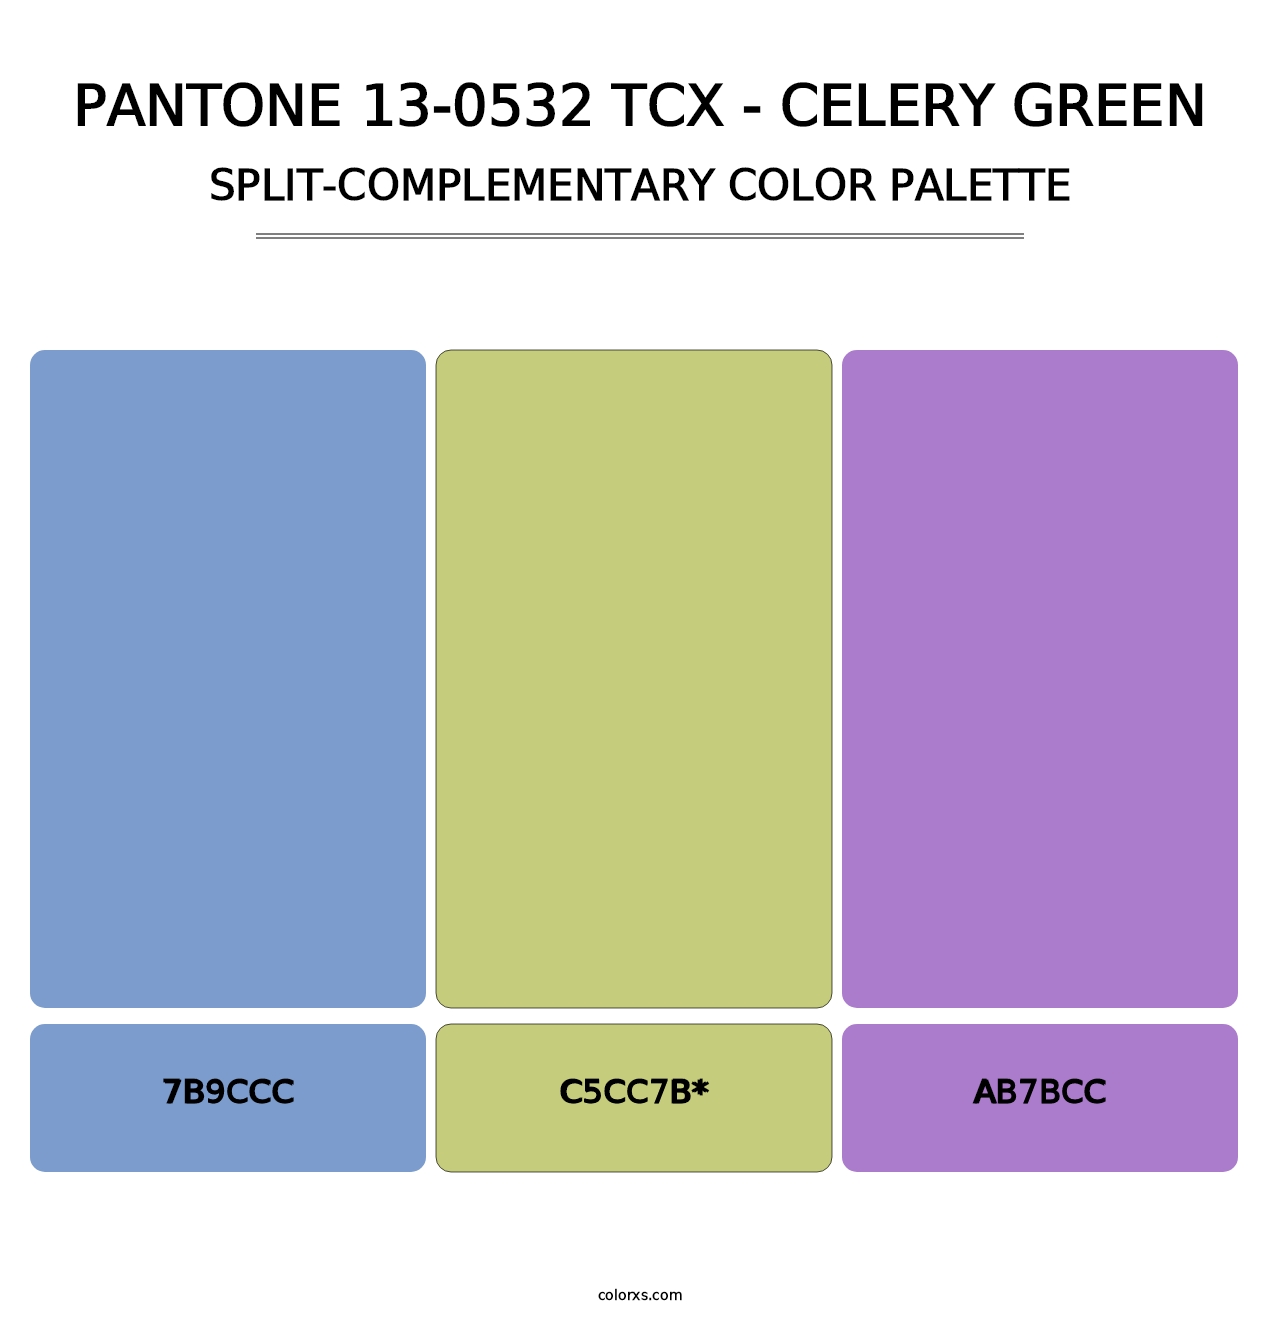 PANTONE 13-0532 TCX - Celery Green - Split-Complementary Color Palette